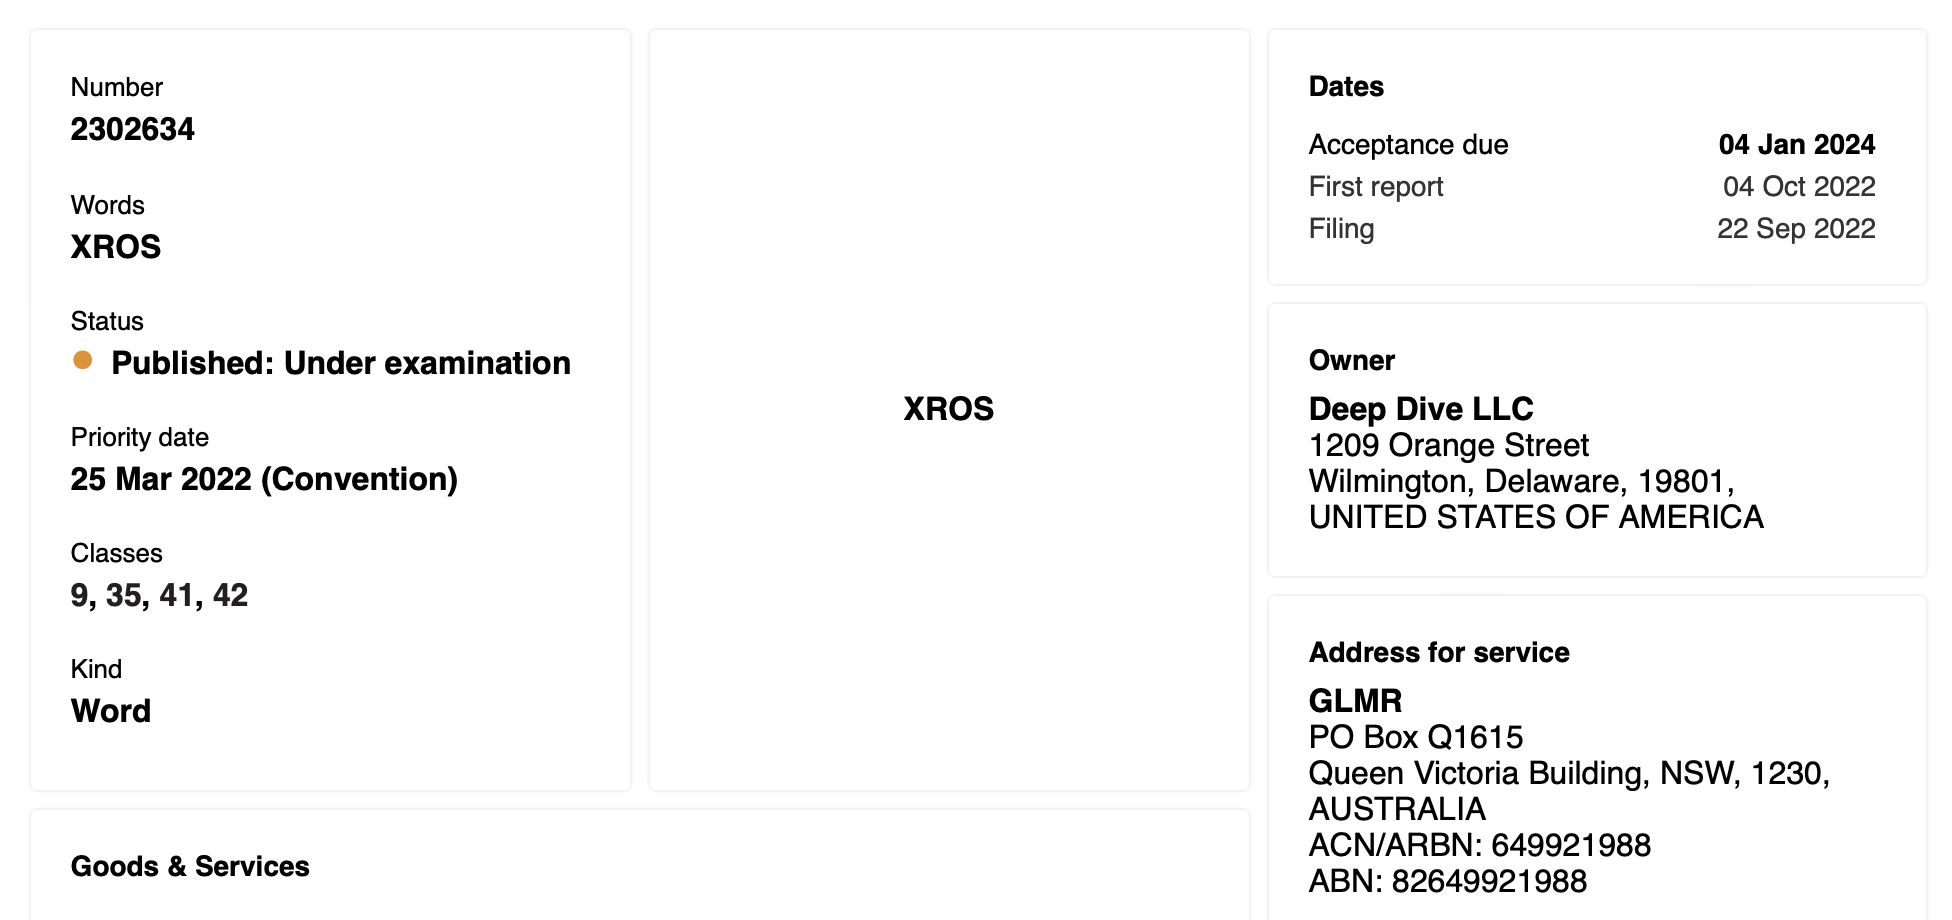 xrOS 在澳大利亞的商標申請